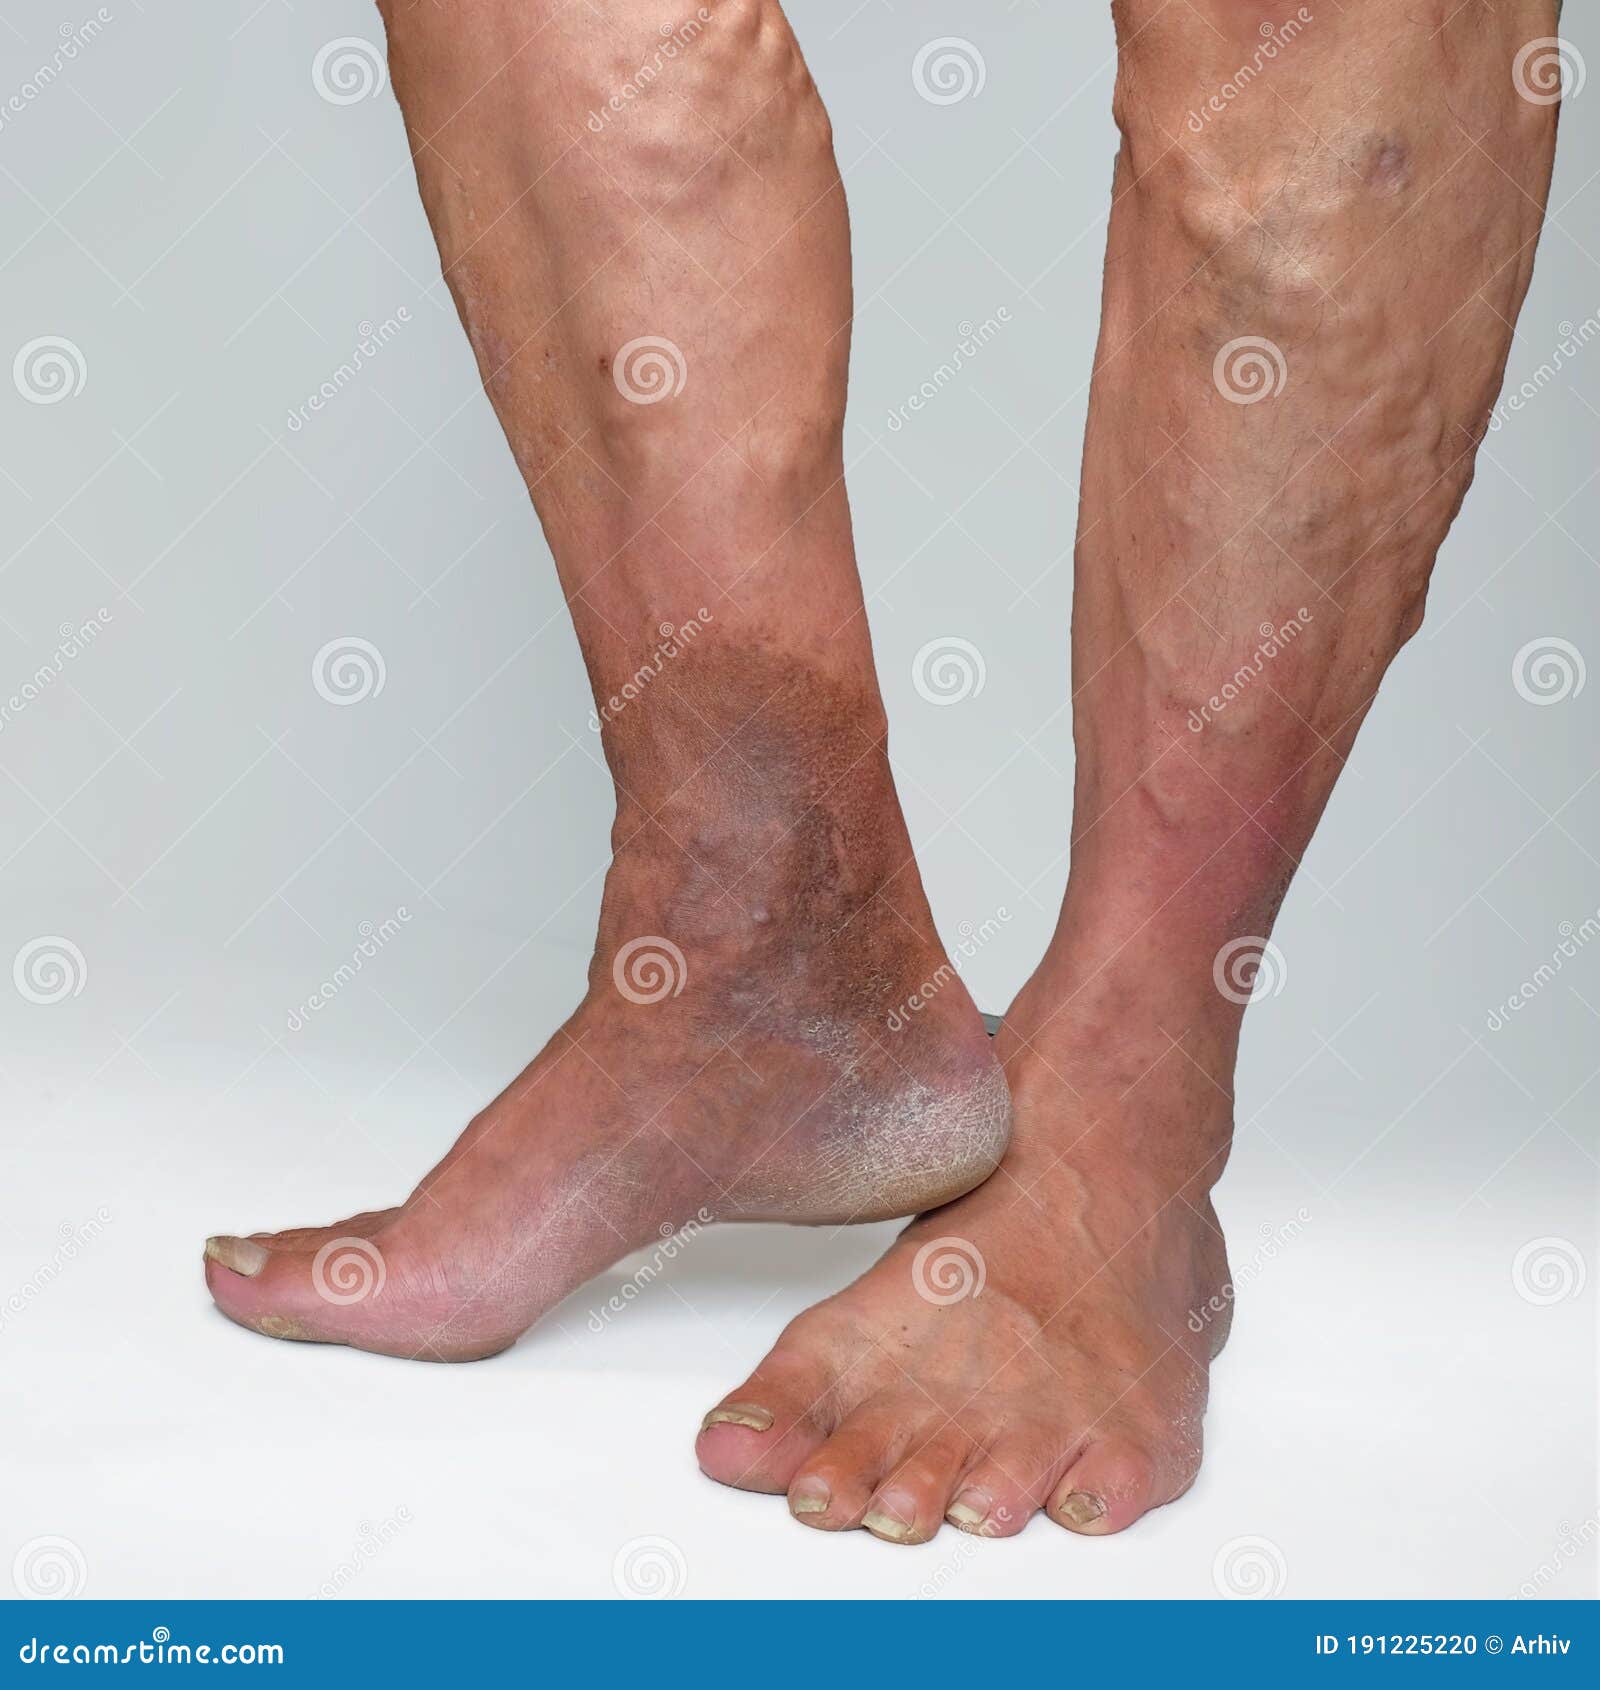 varicose veins of the lower extremities)